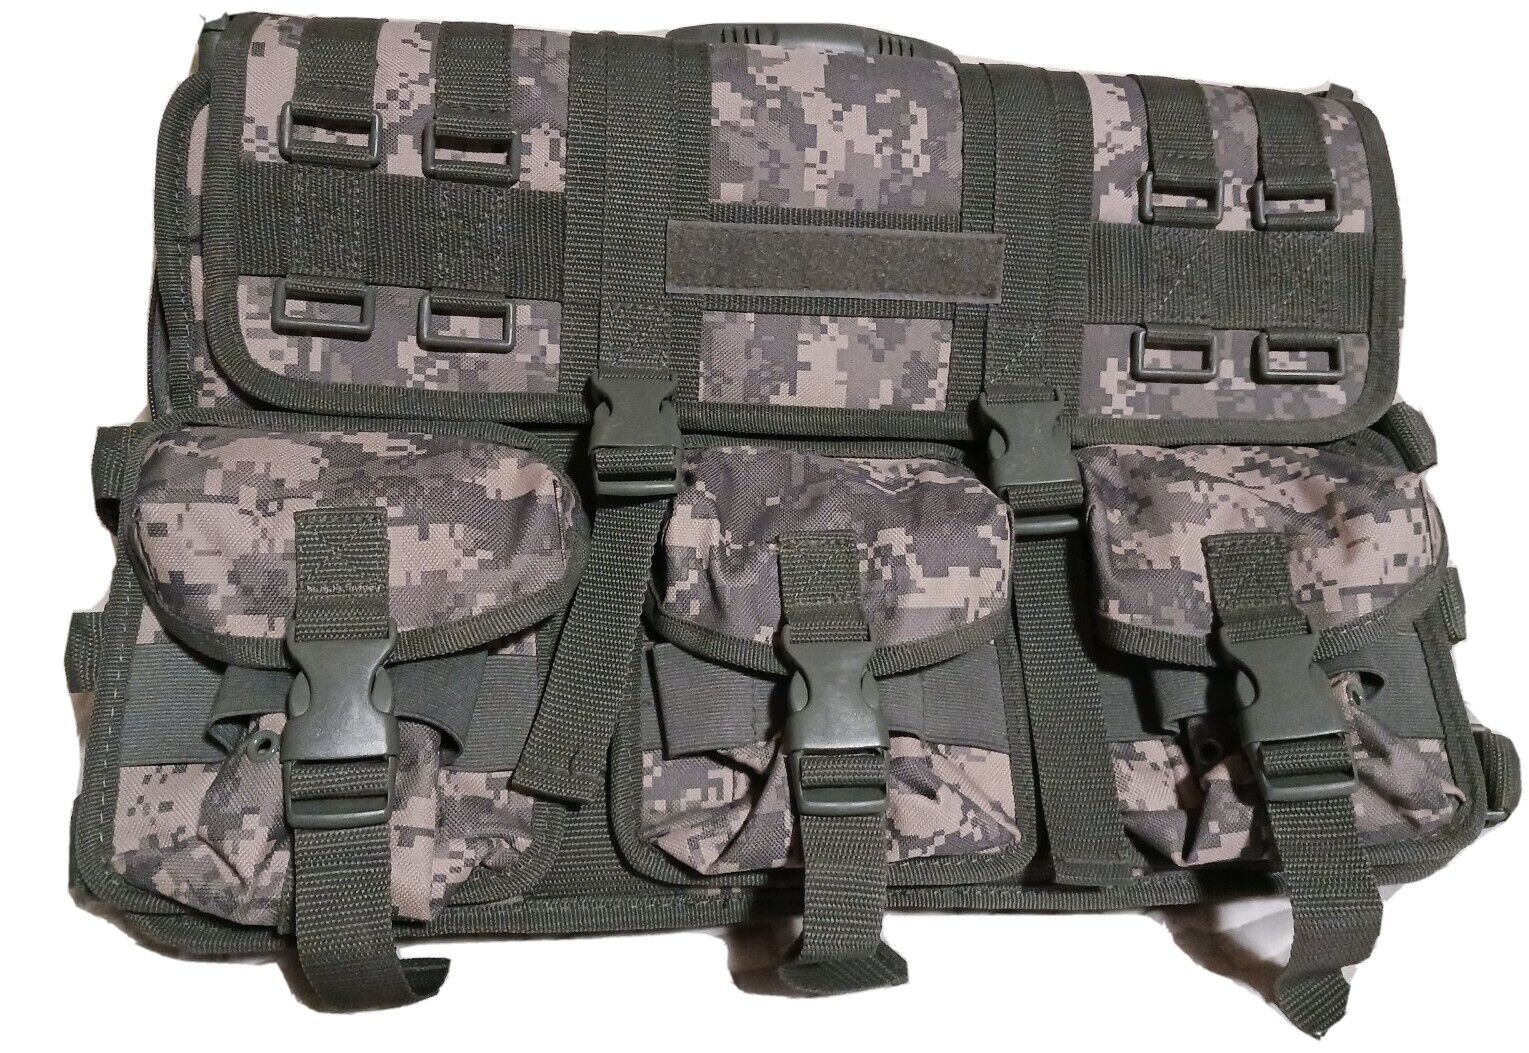 Authentic Army Digital Camo Computer Bag Laptop Military U.S.Army